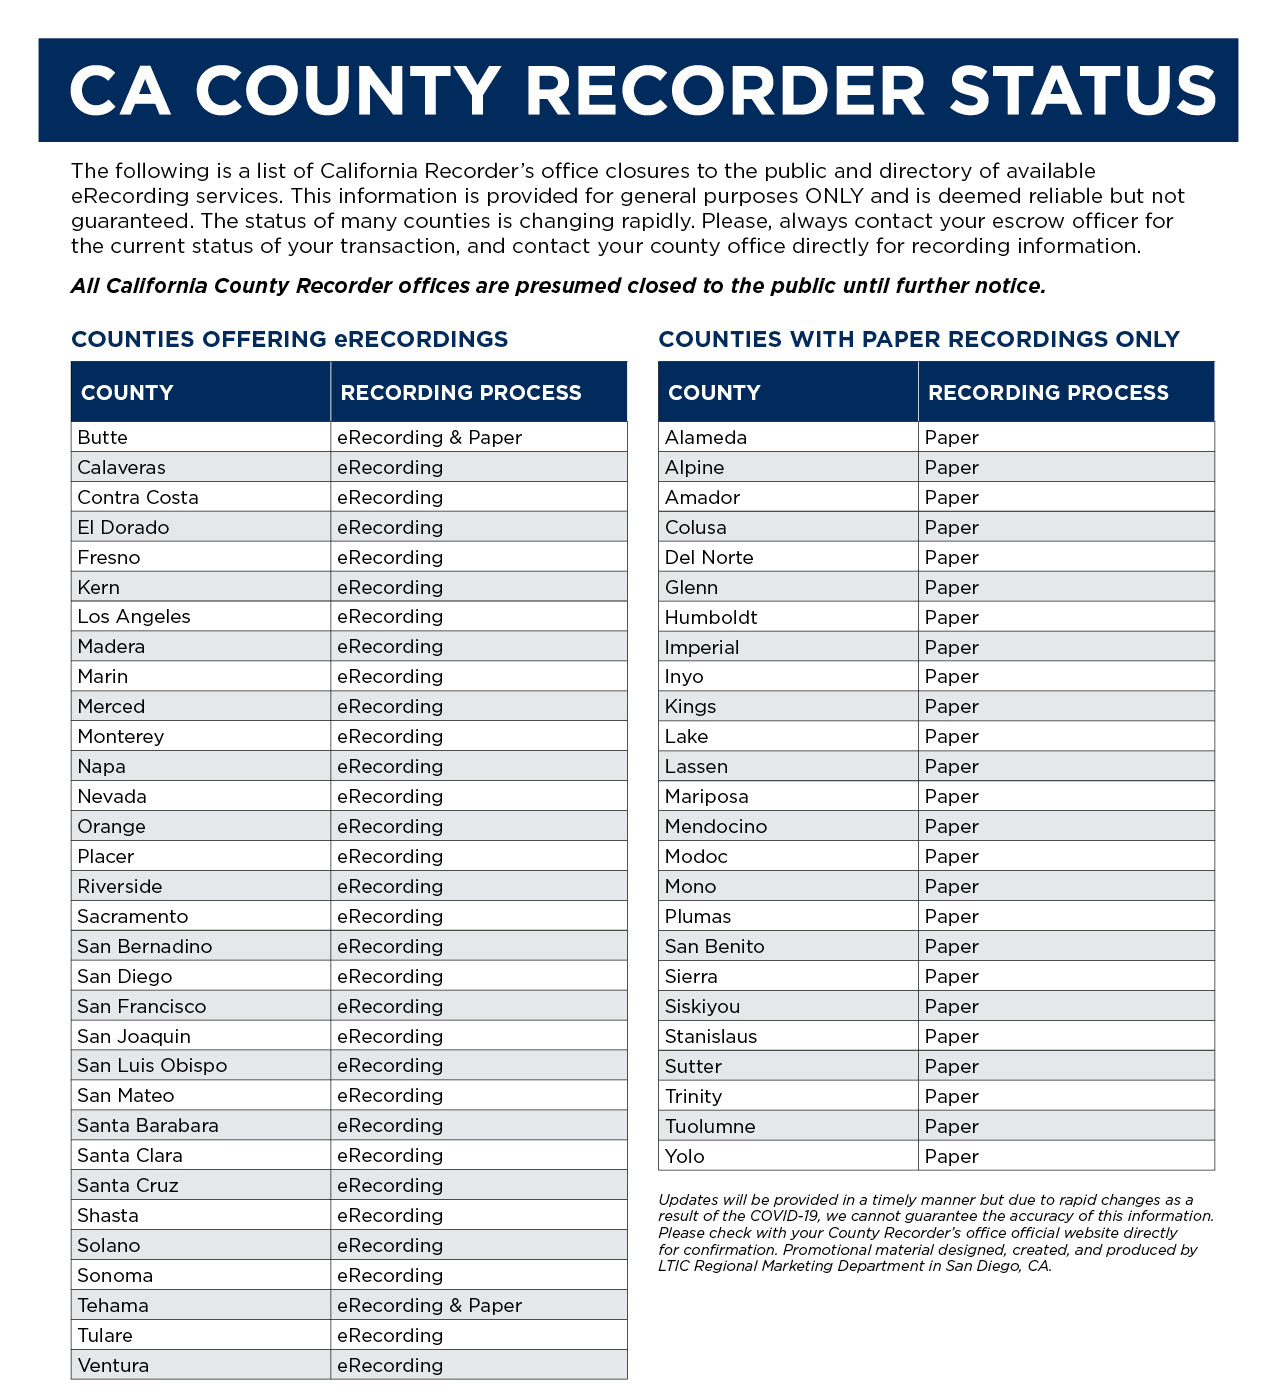 CA-County-Recorder-Status